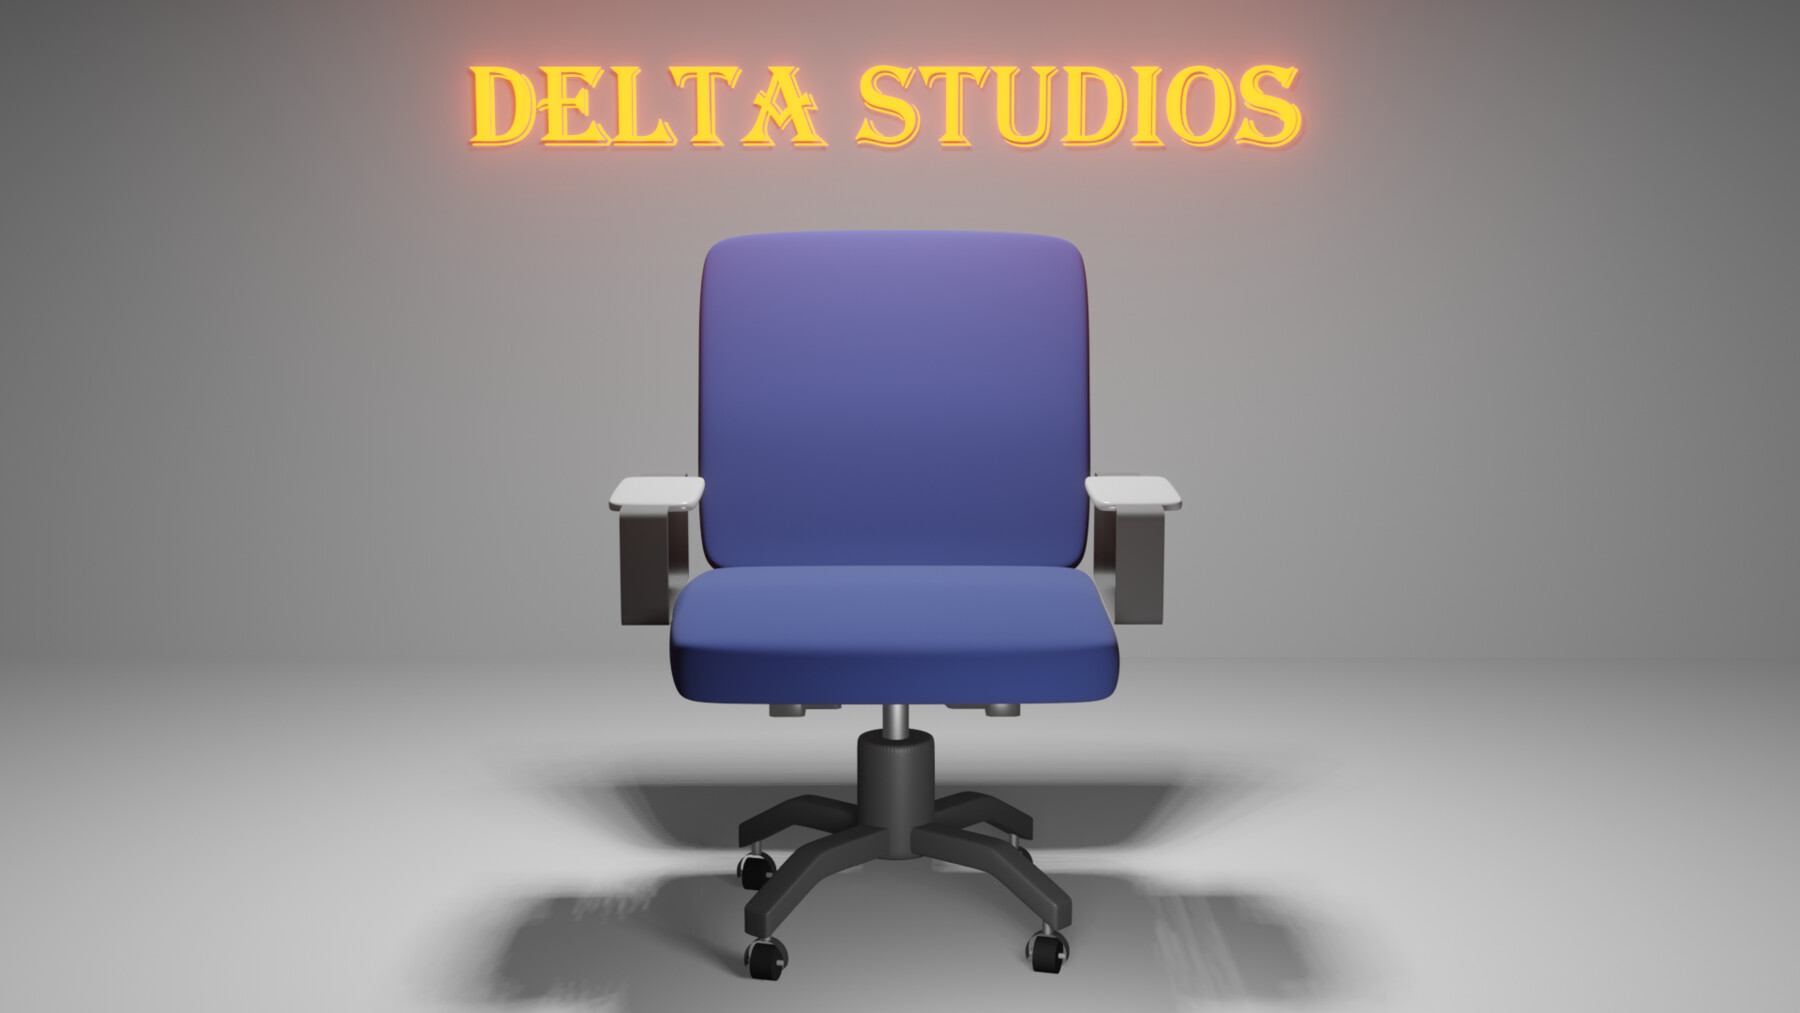 ArtStation - Stylized modern 3D office chair in Blender | Game Assets